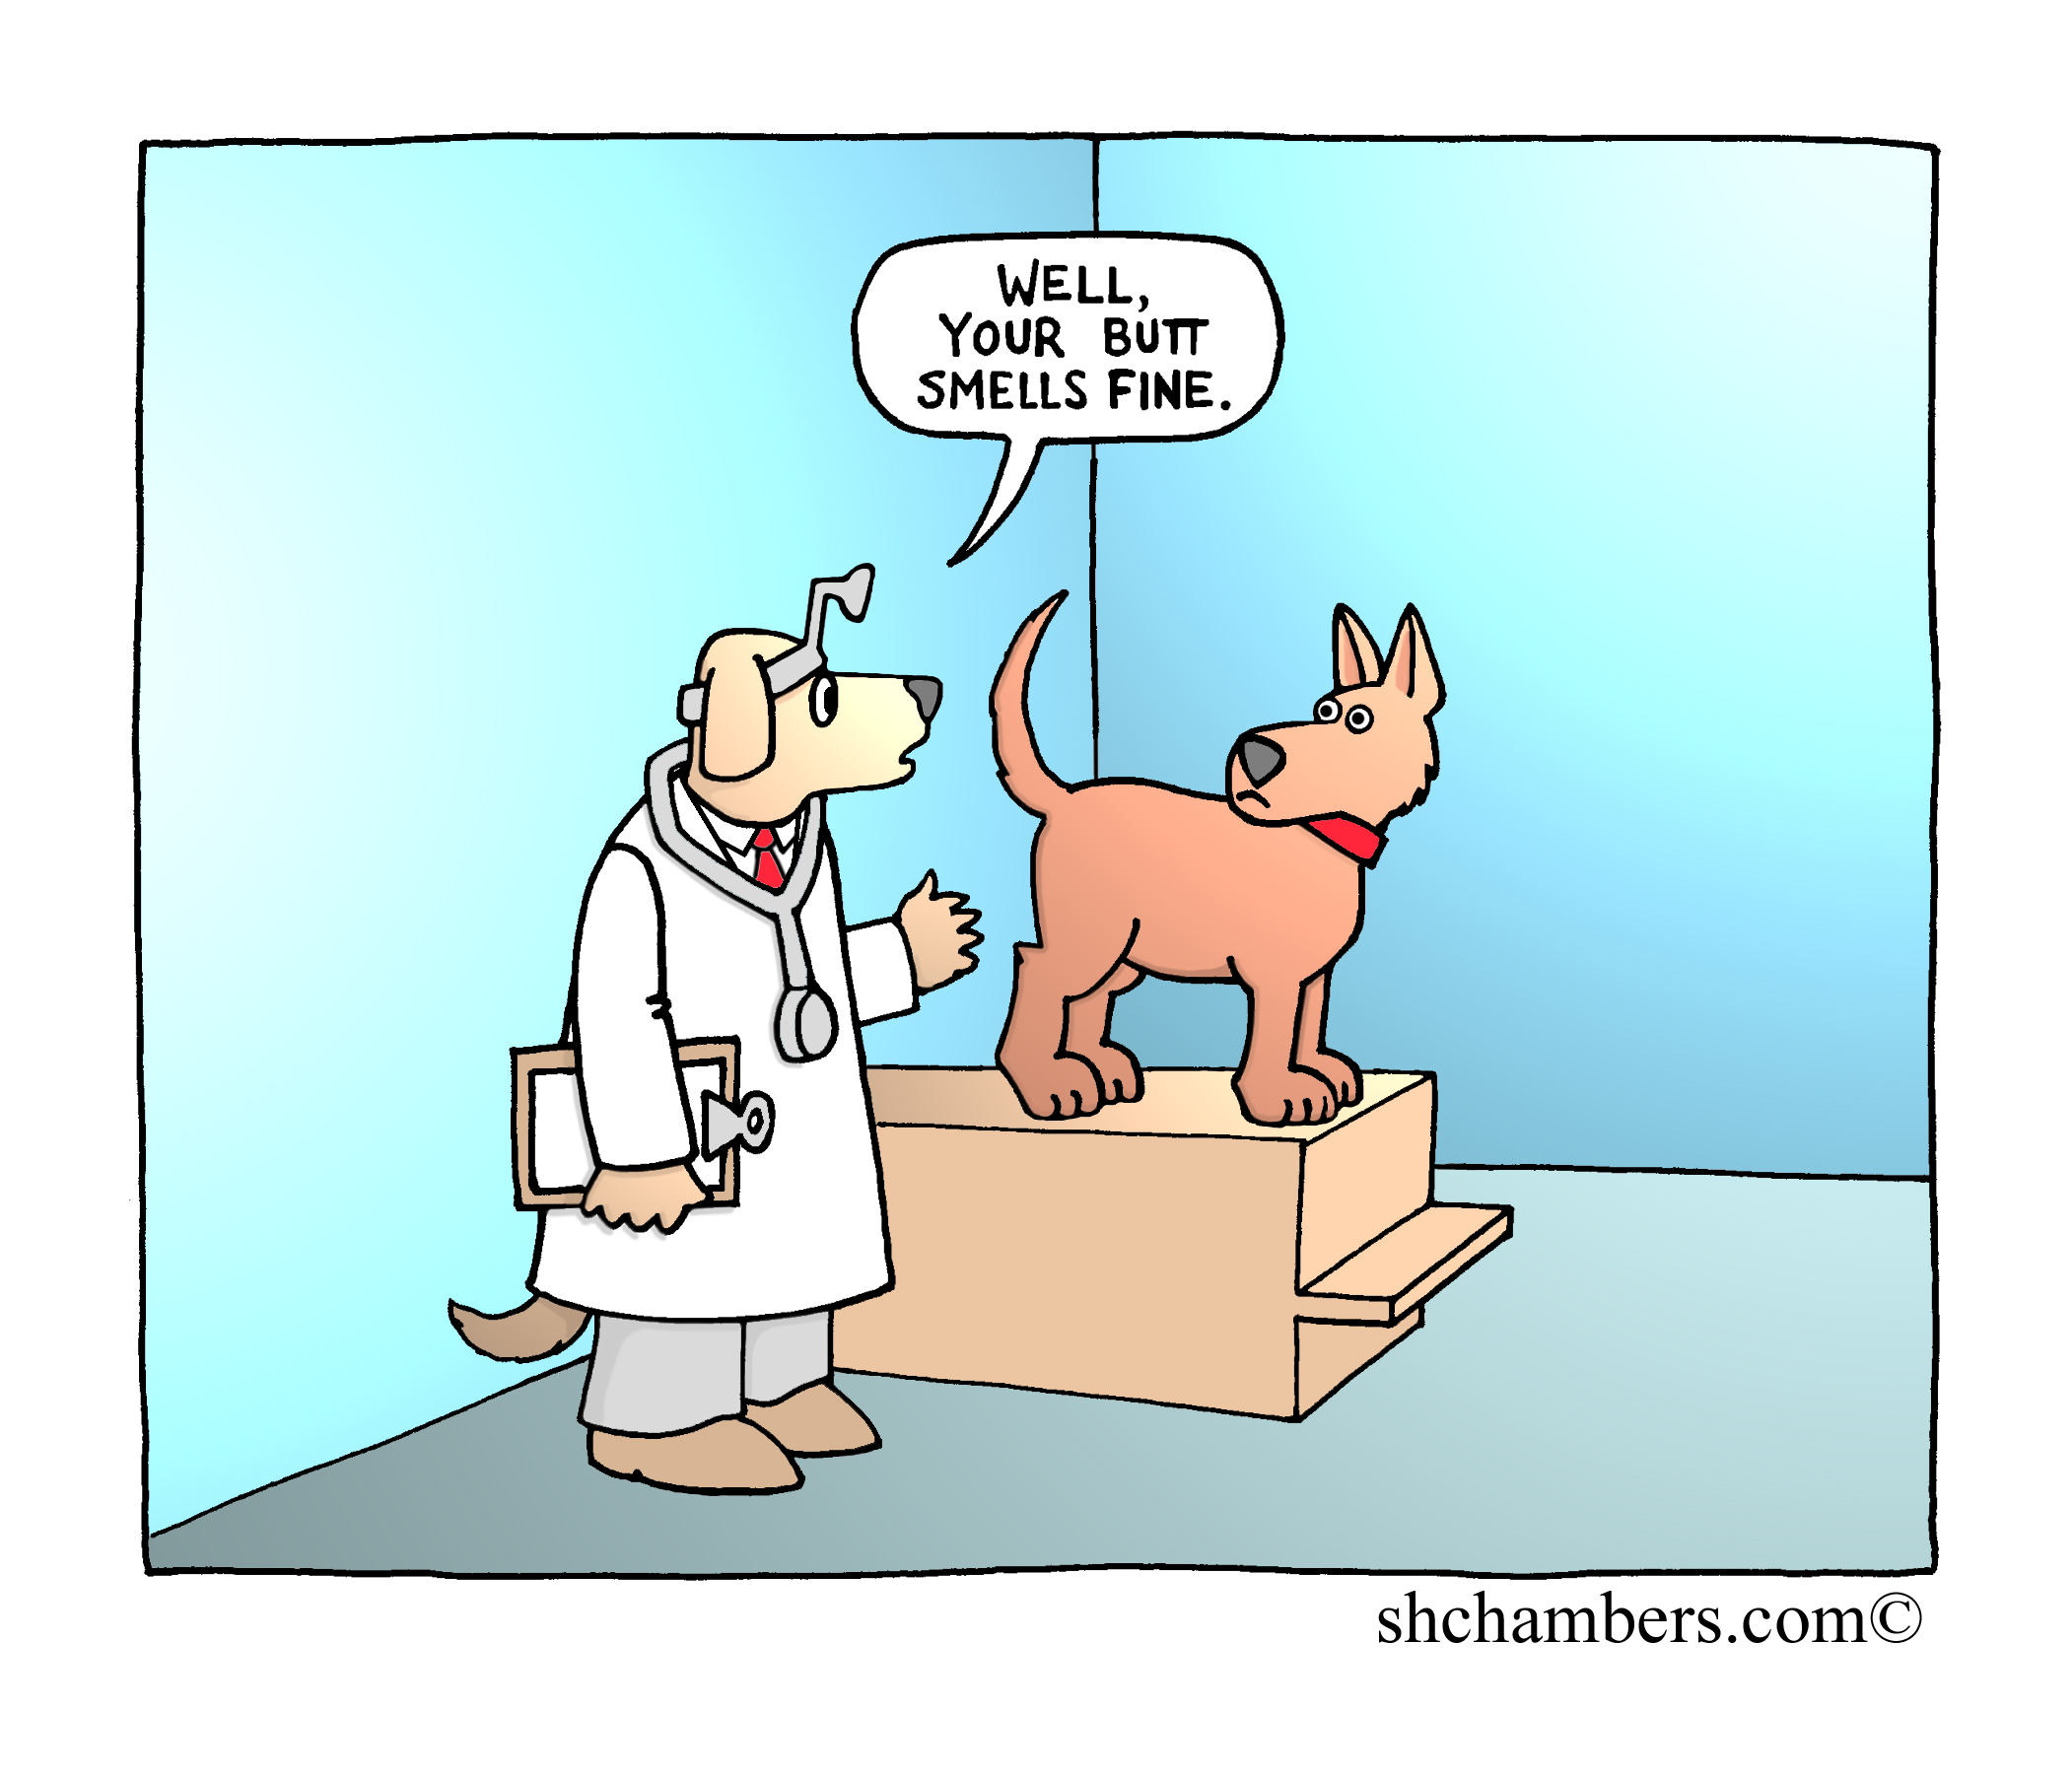 Canine diagnostic techniques are often crude, but effective.